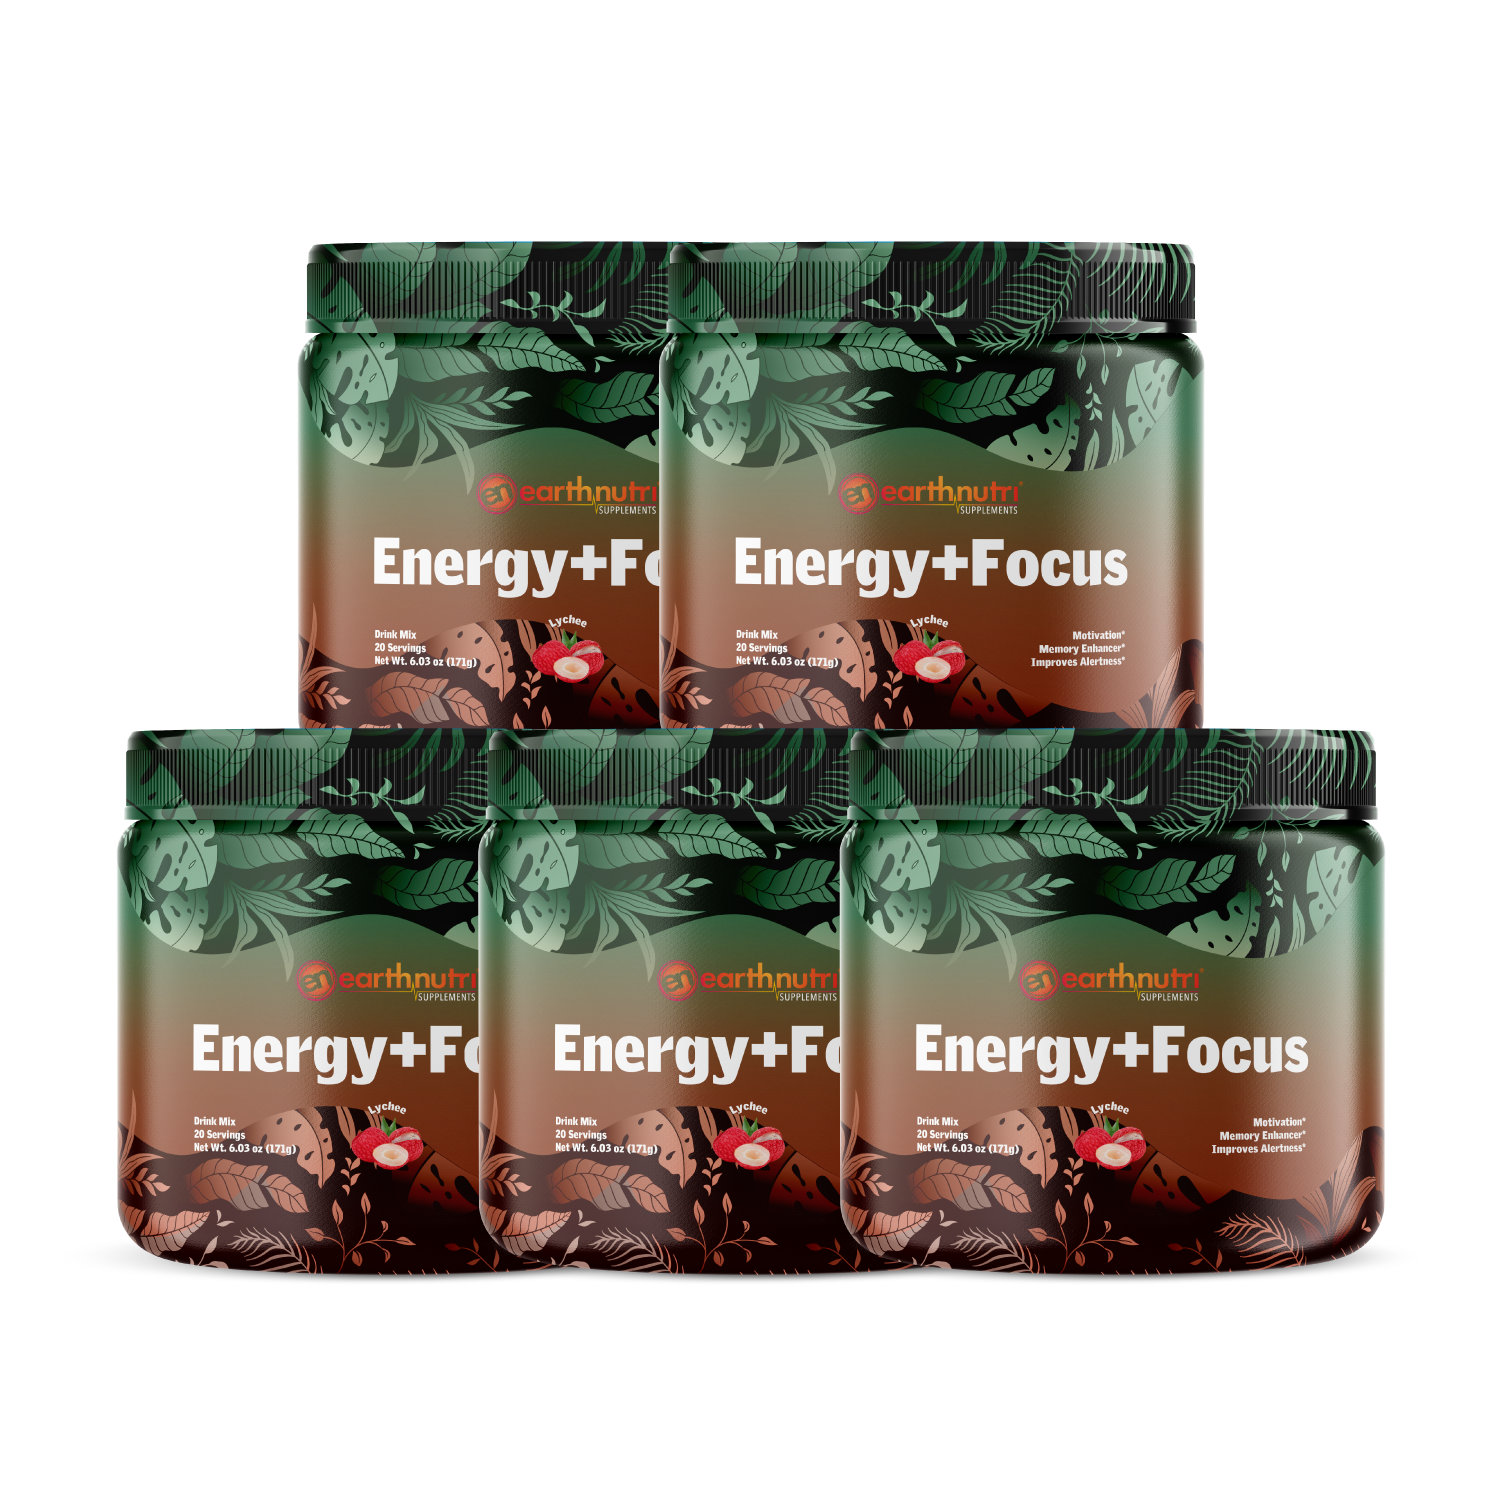 Energy + Focus | Memory Enhancer